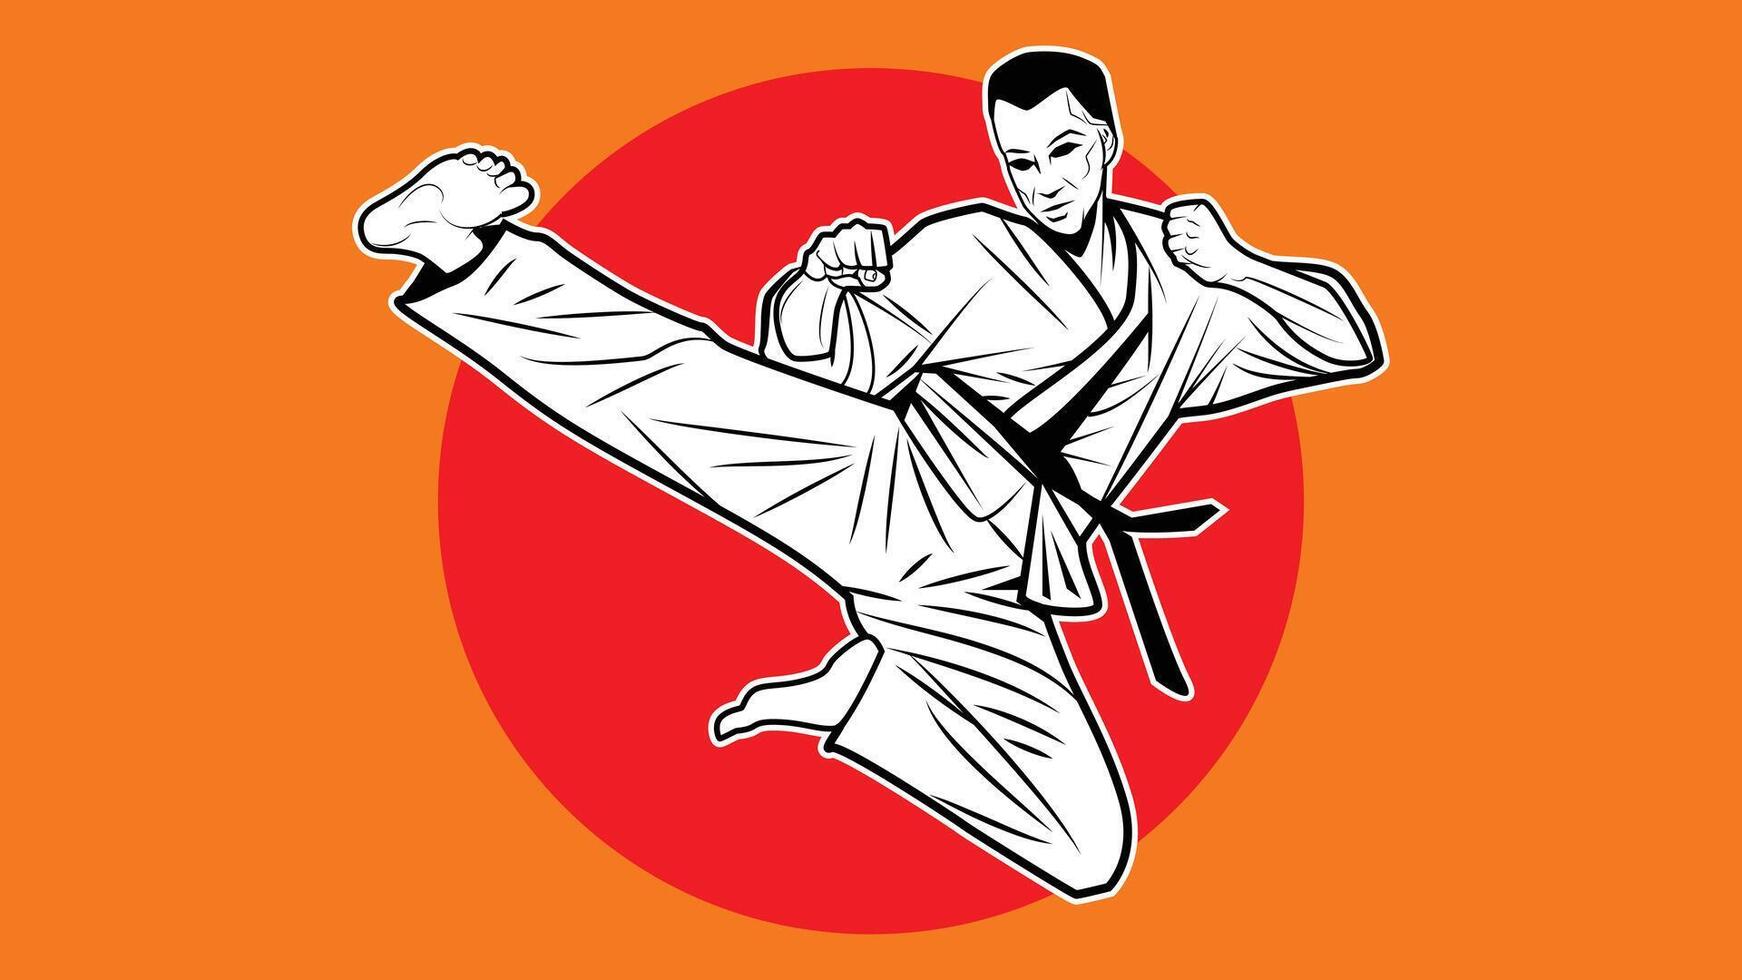 Karate player pose logo design flat illustration vector